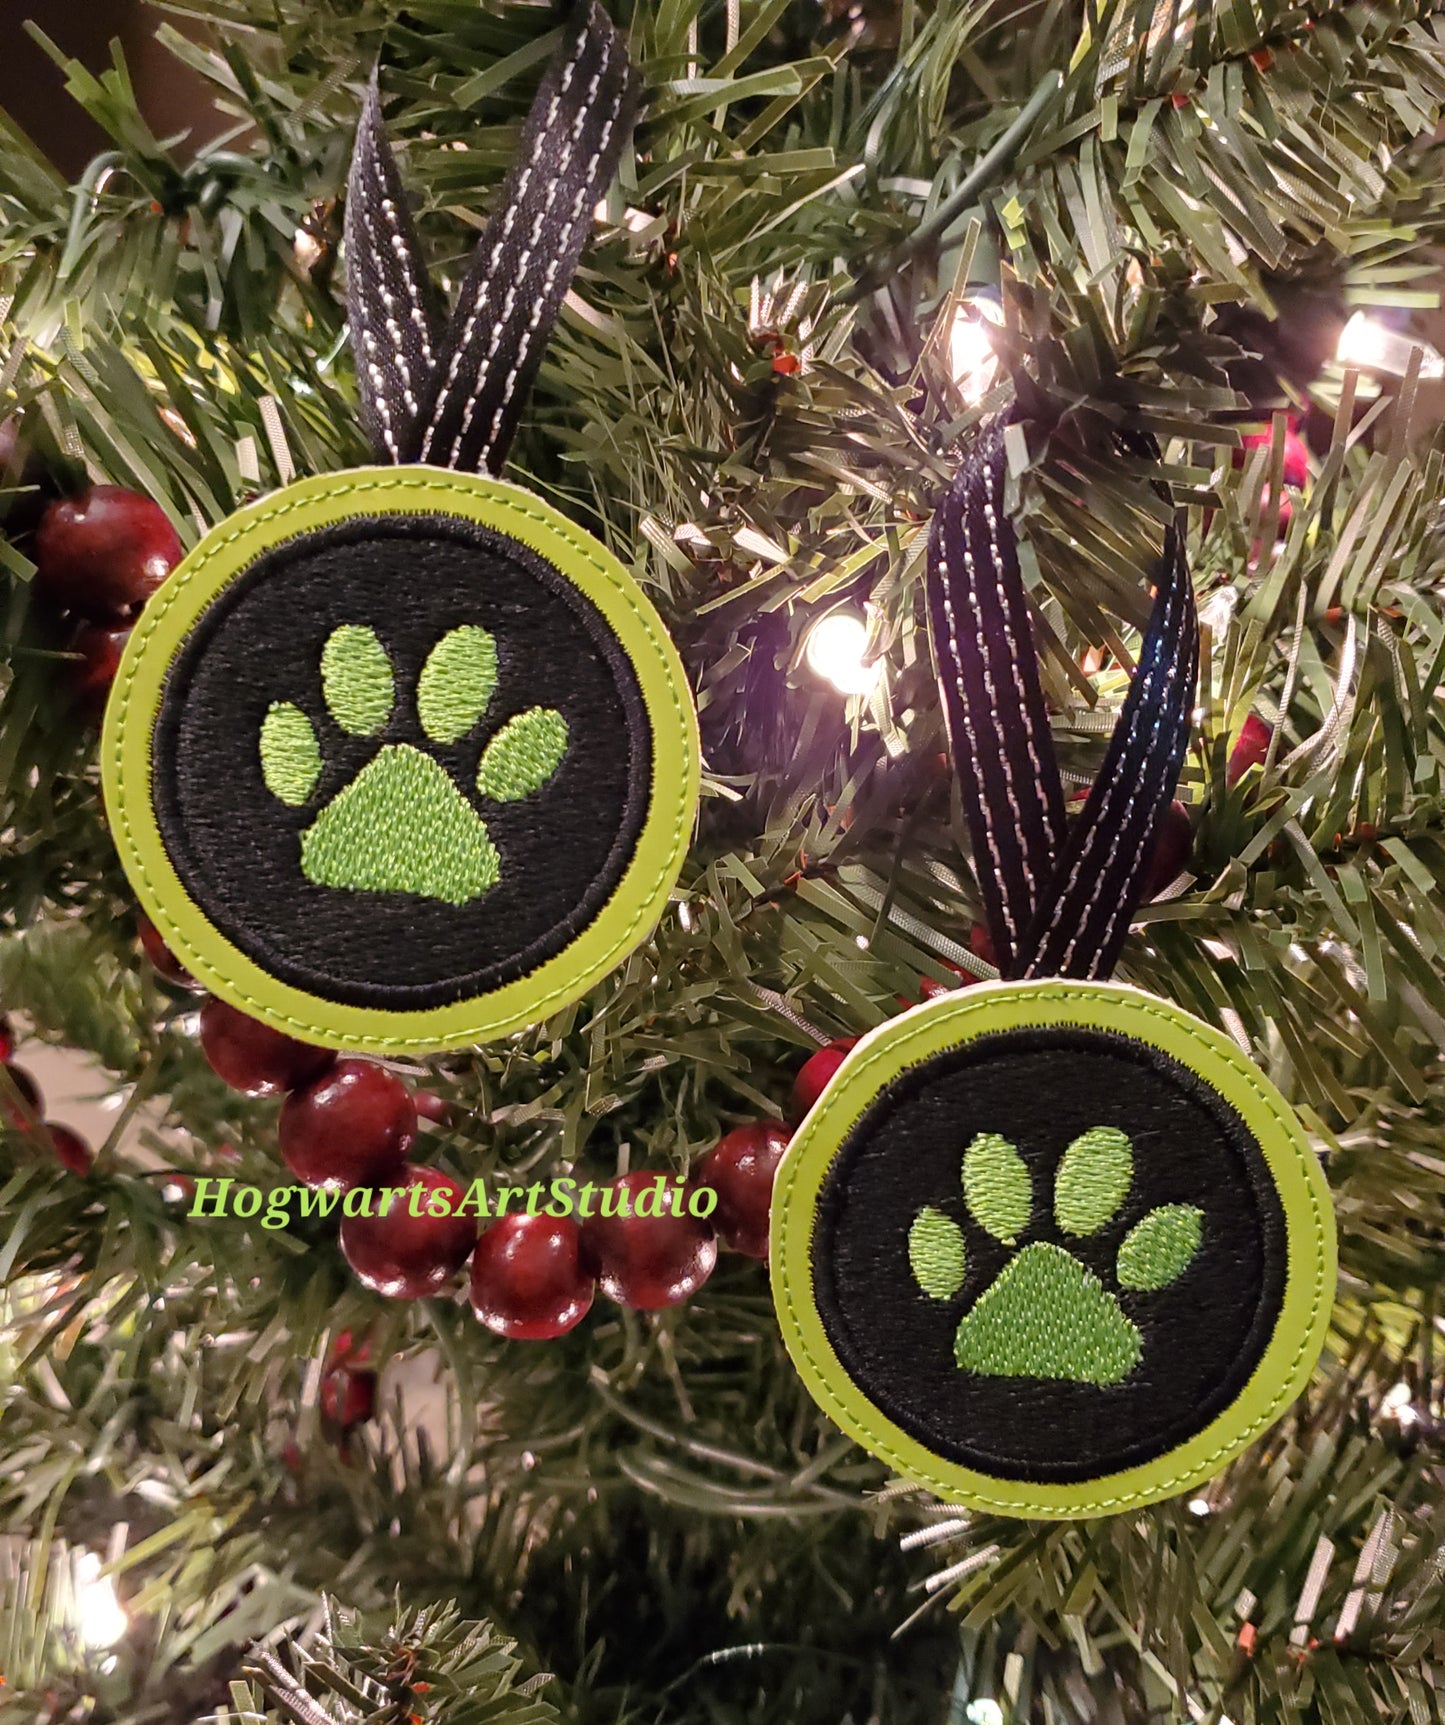 cat paw print ornaments on a tree